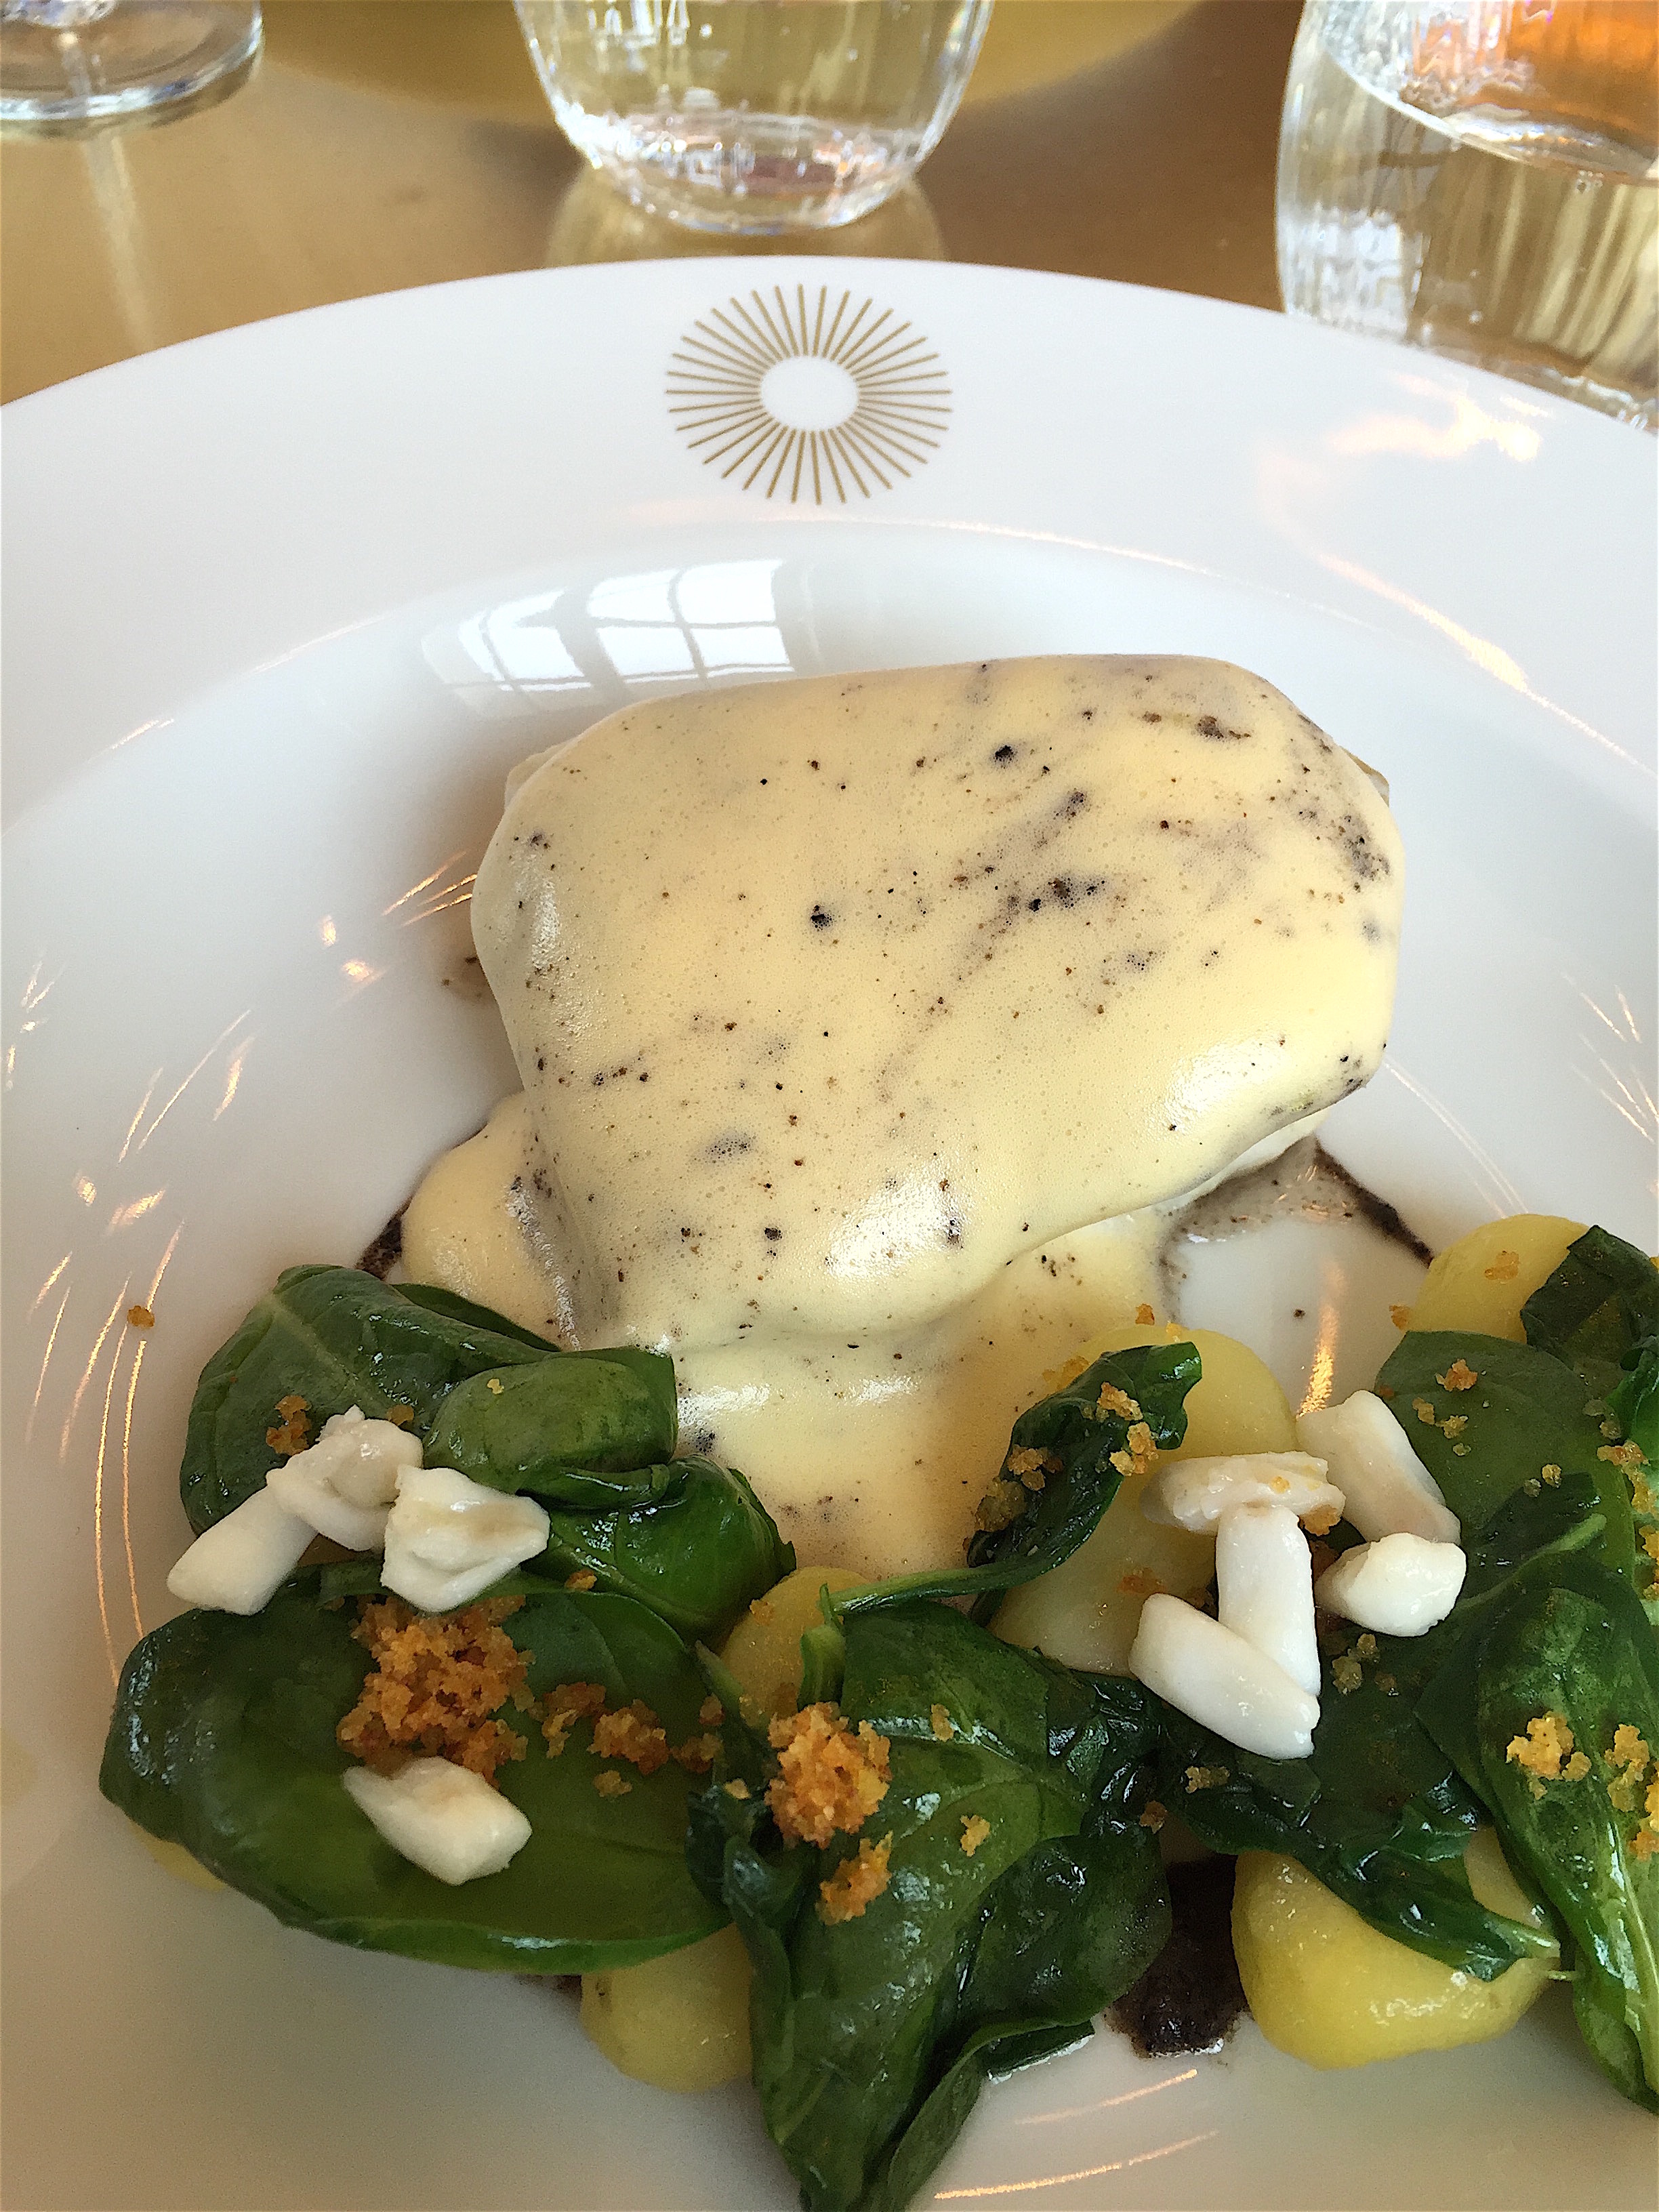 Ore restaurant, Versailles - Turbot with truffled Hollandaise sauce @ Alexander Lobrano